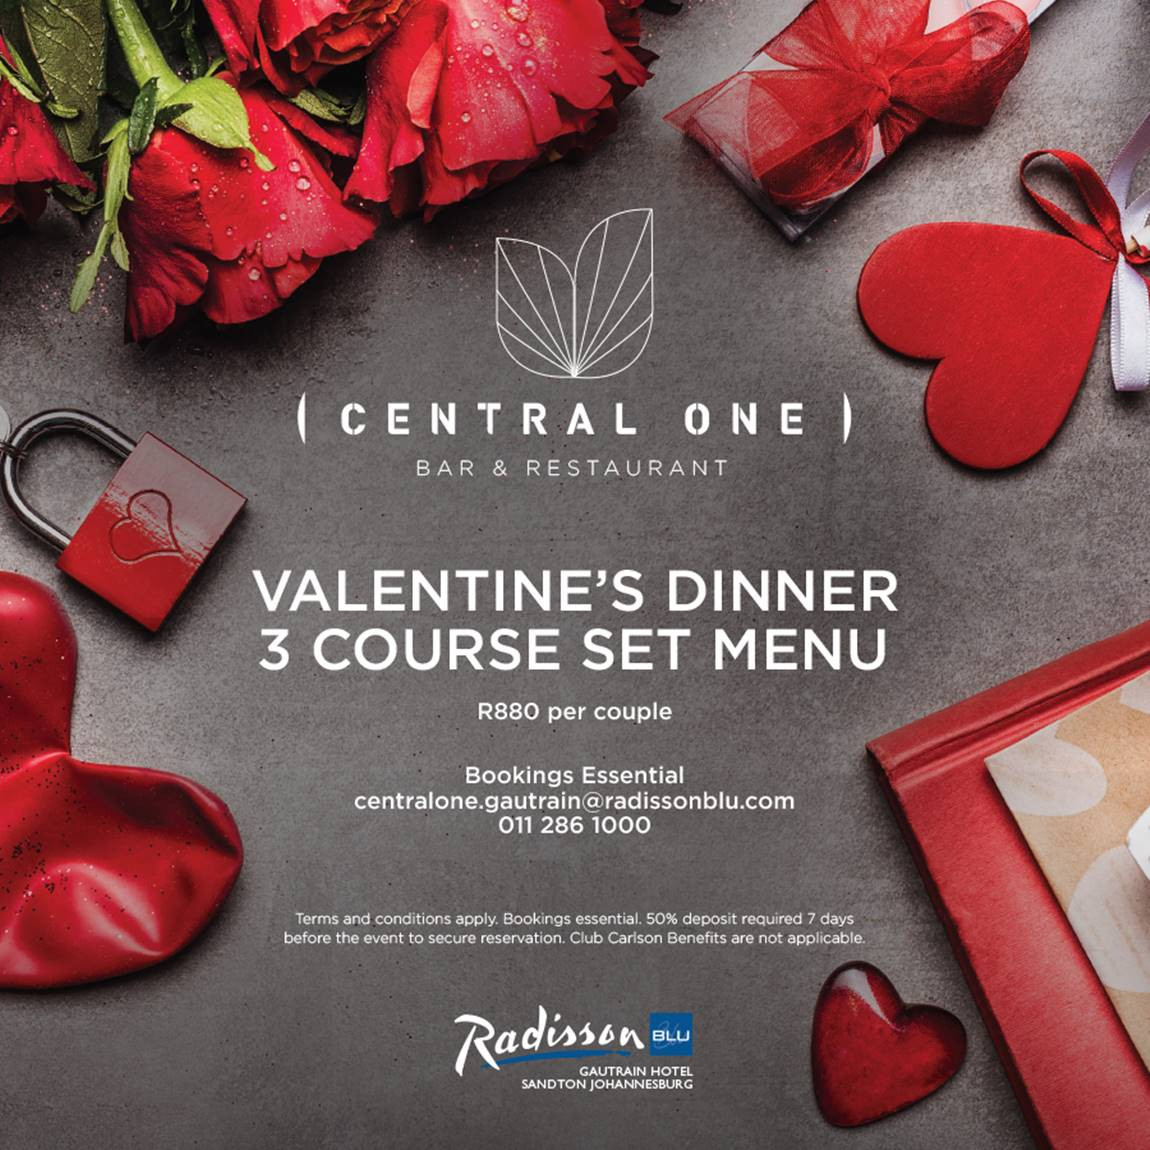 Valentines Dinner Deals
 Valentines Day Dinner at Central e Restaurant